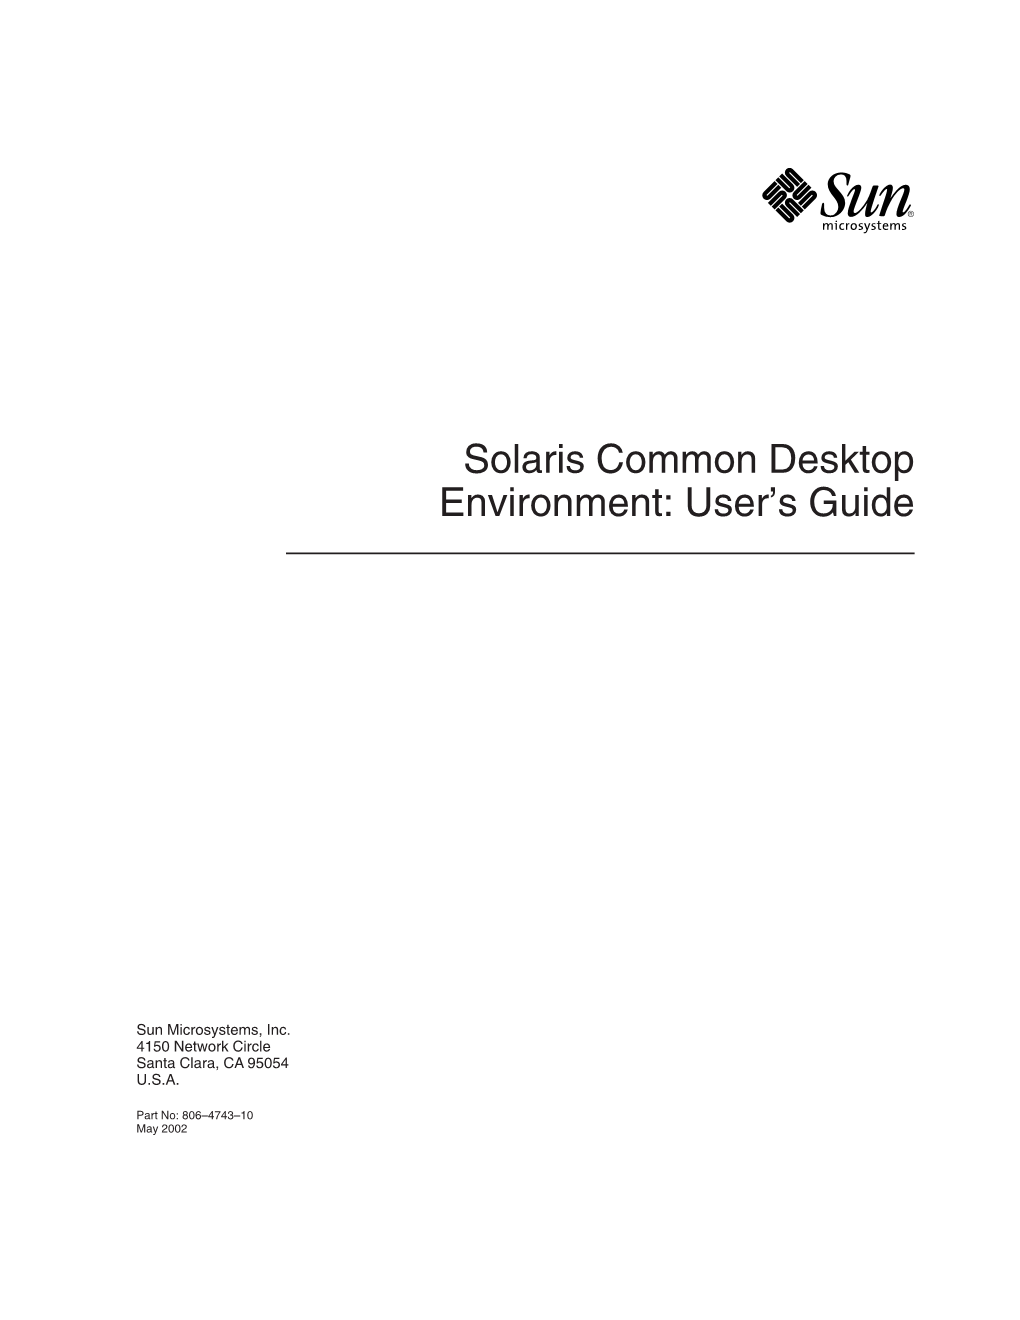 Solaris Common Desktop Environment: User's Guide